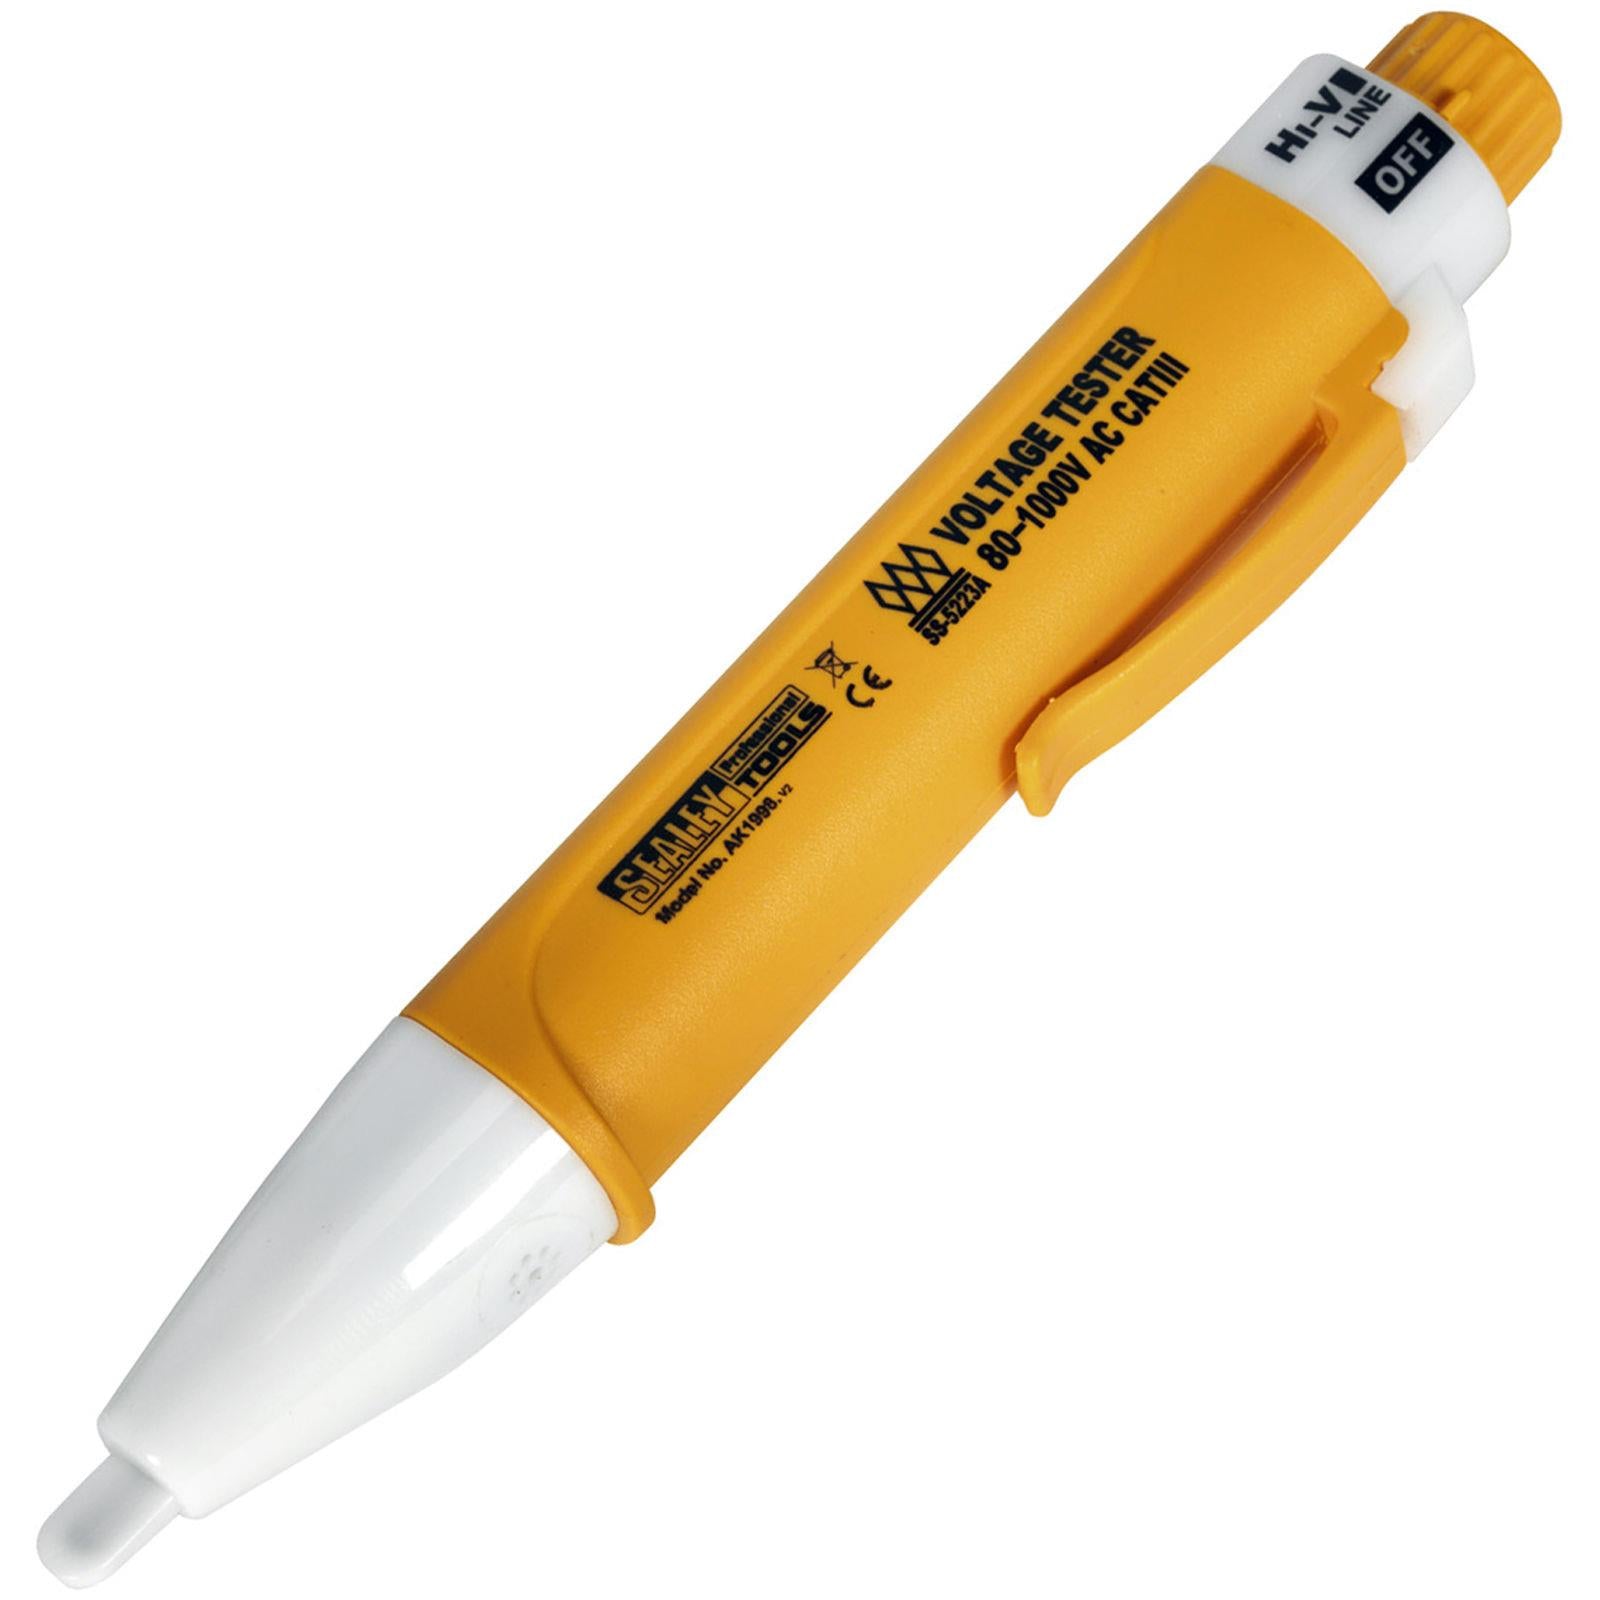 Sealey Non Contact Voltage Tester 80-1000v Electrical Pen Detector Audible Indication